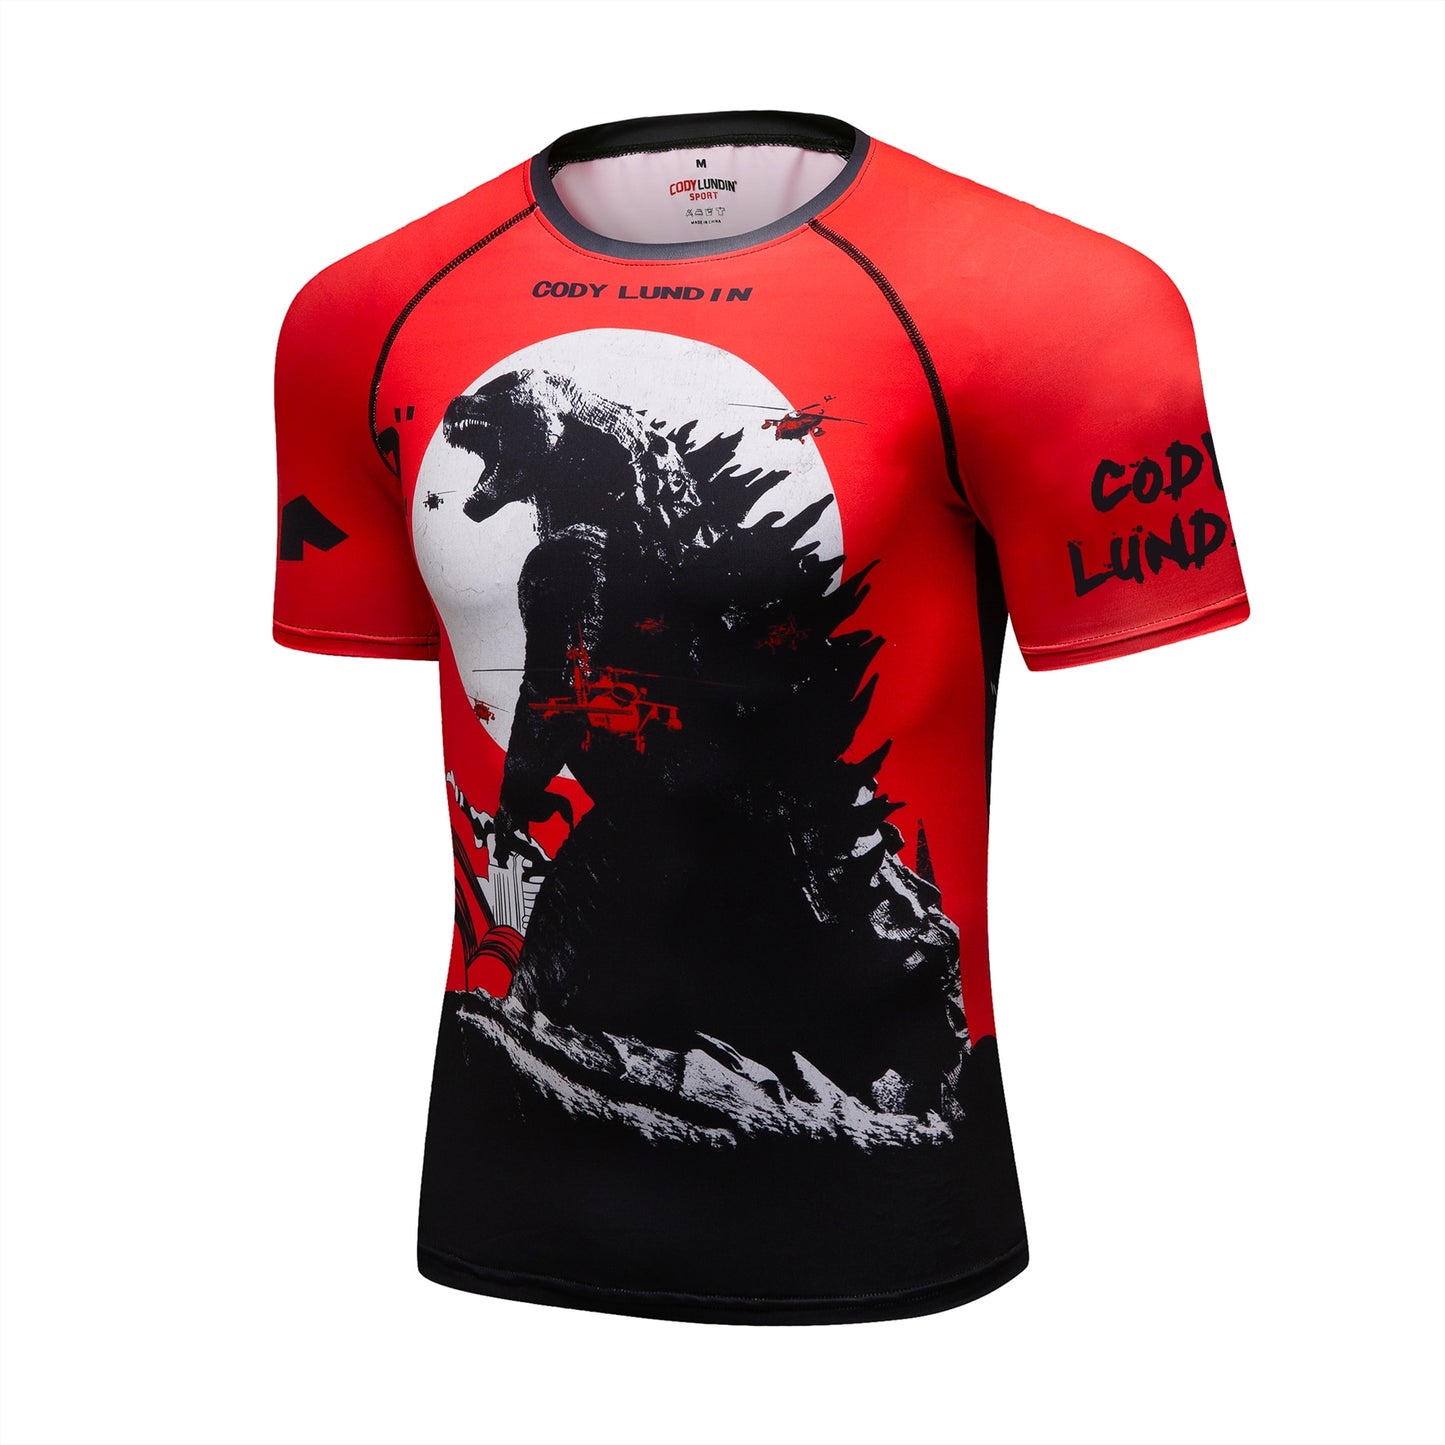 Godzilla Men's Quick Dry Tech Shirt (M, L, XL, 2XL)